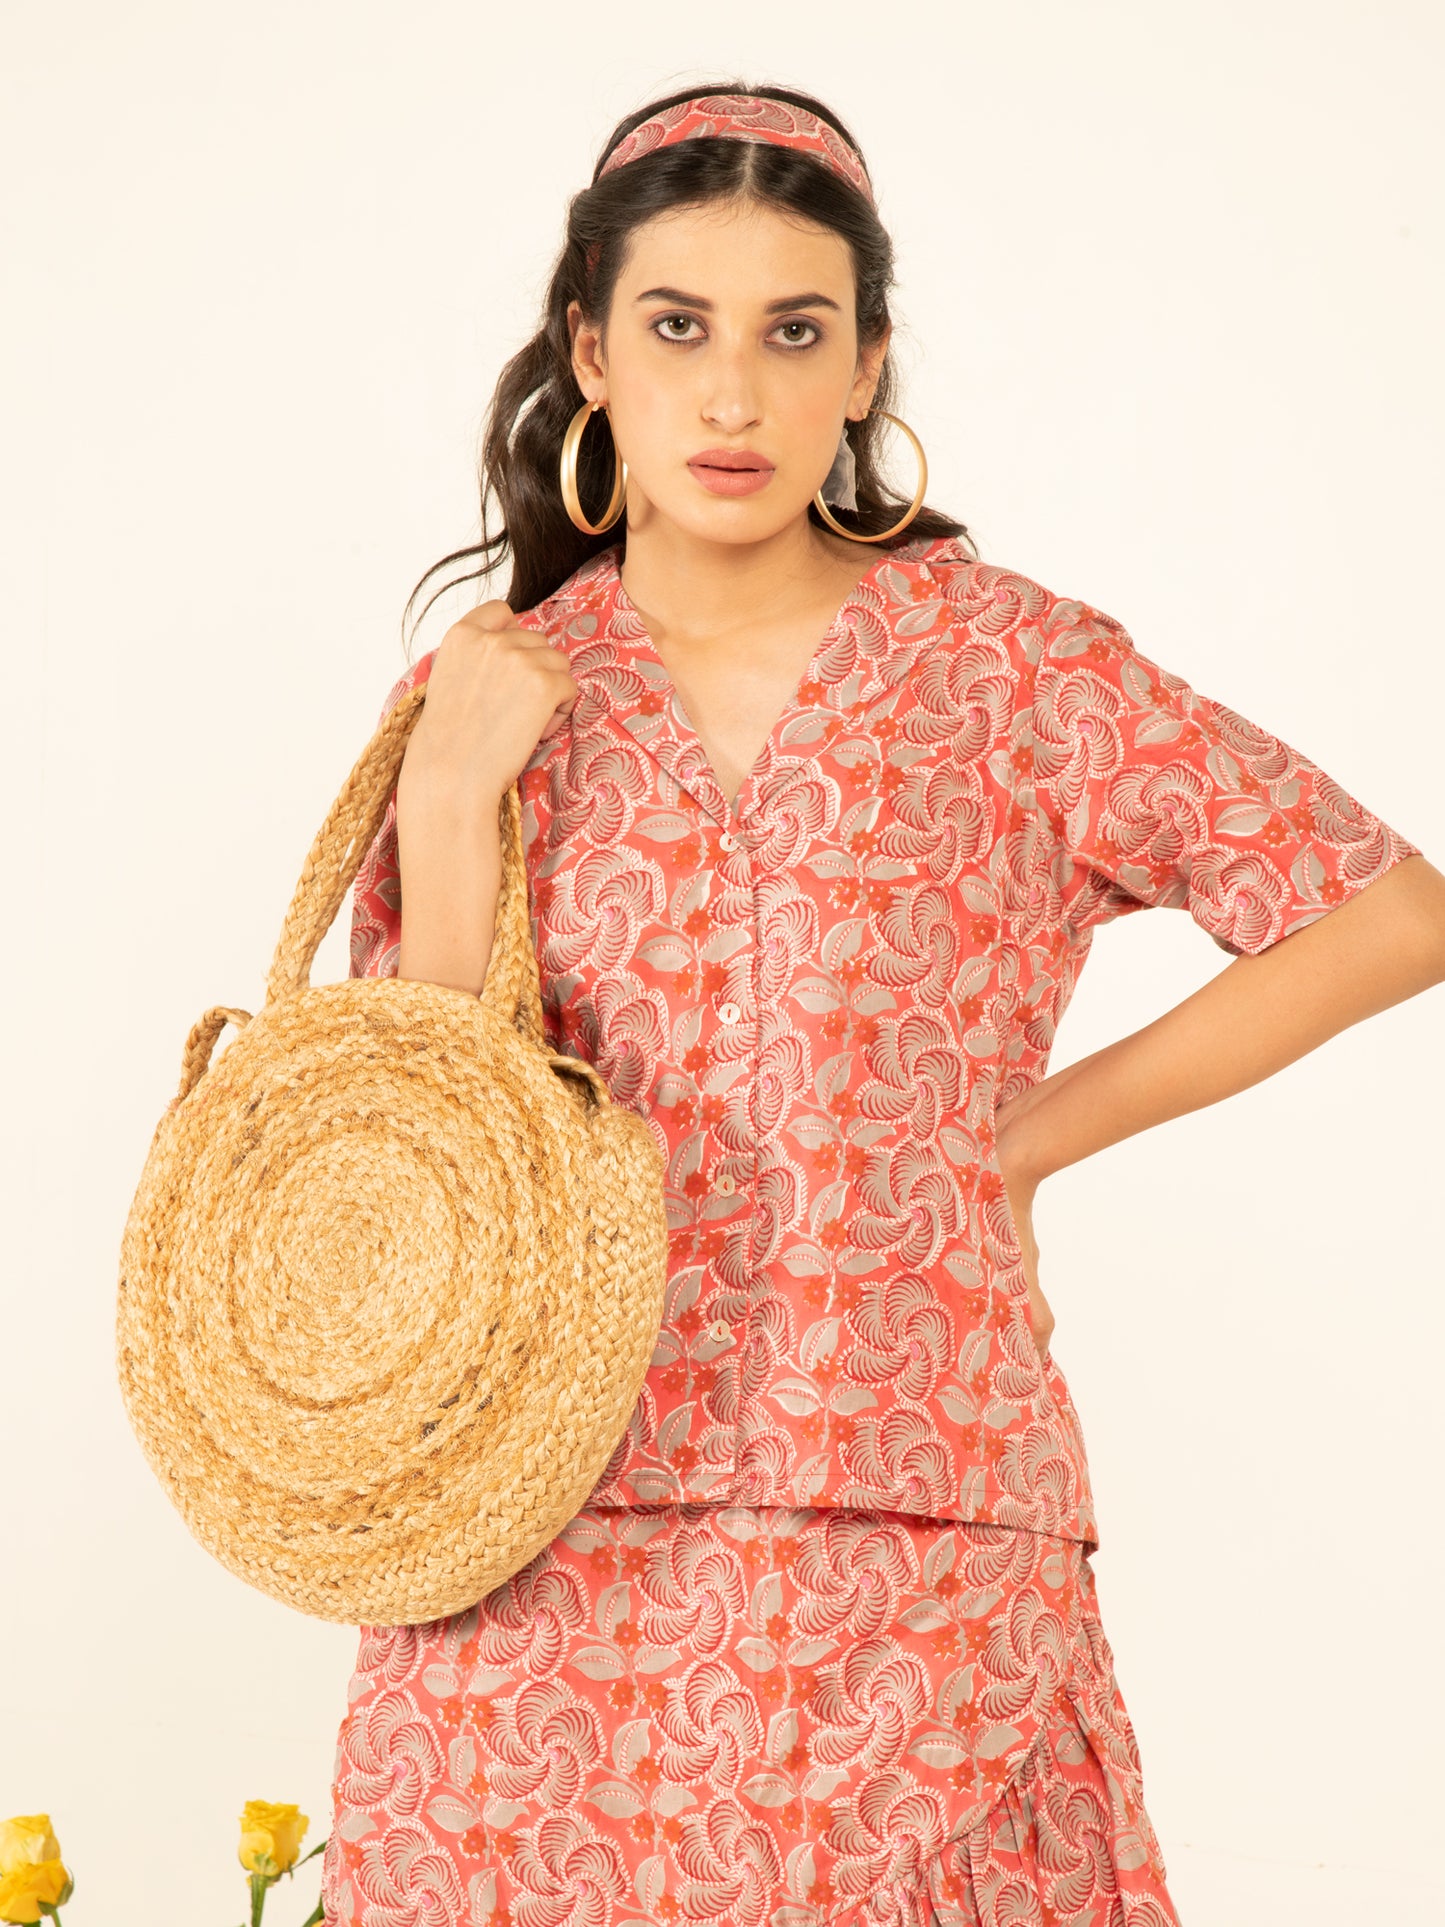 Sacha Flounce Skirt Co-ord - Multicolour Hand Block Printed Cotton Shirt Style Top And Ruffle Detailed Skirt